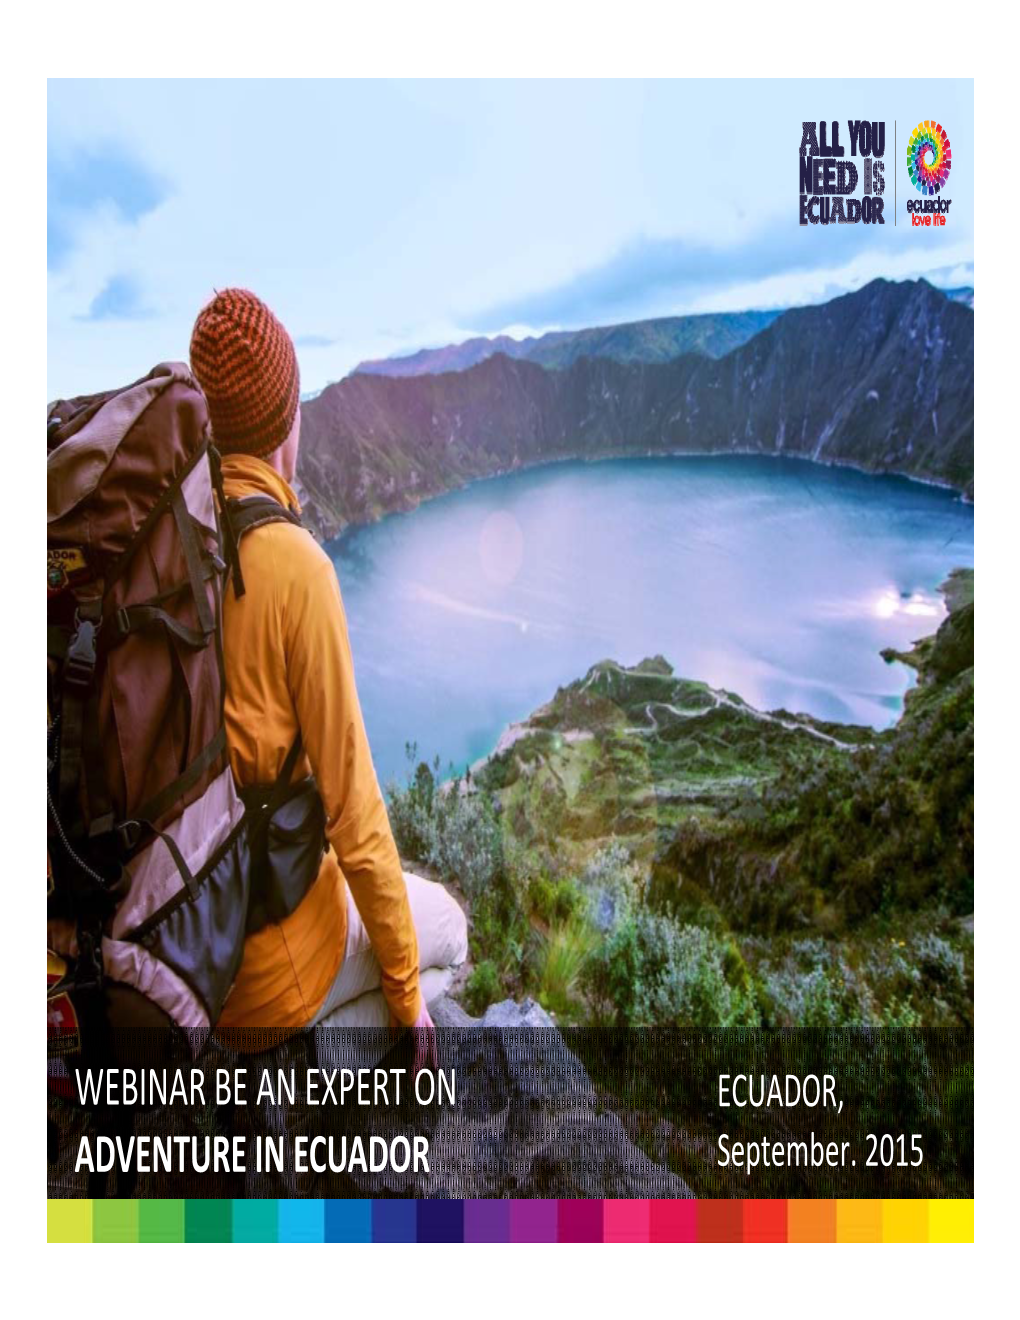 Webinar Be an Expert on Adventure in Ecuador